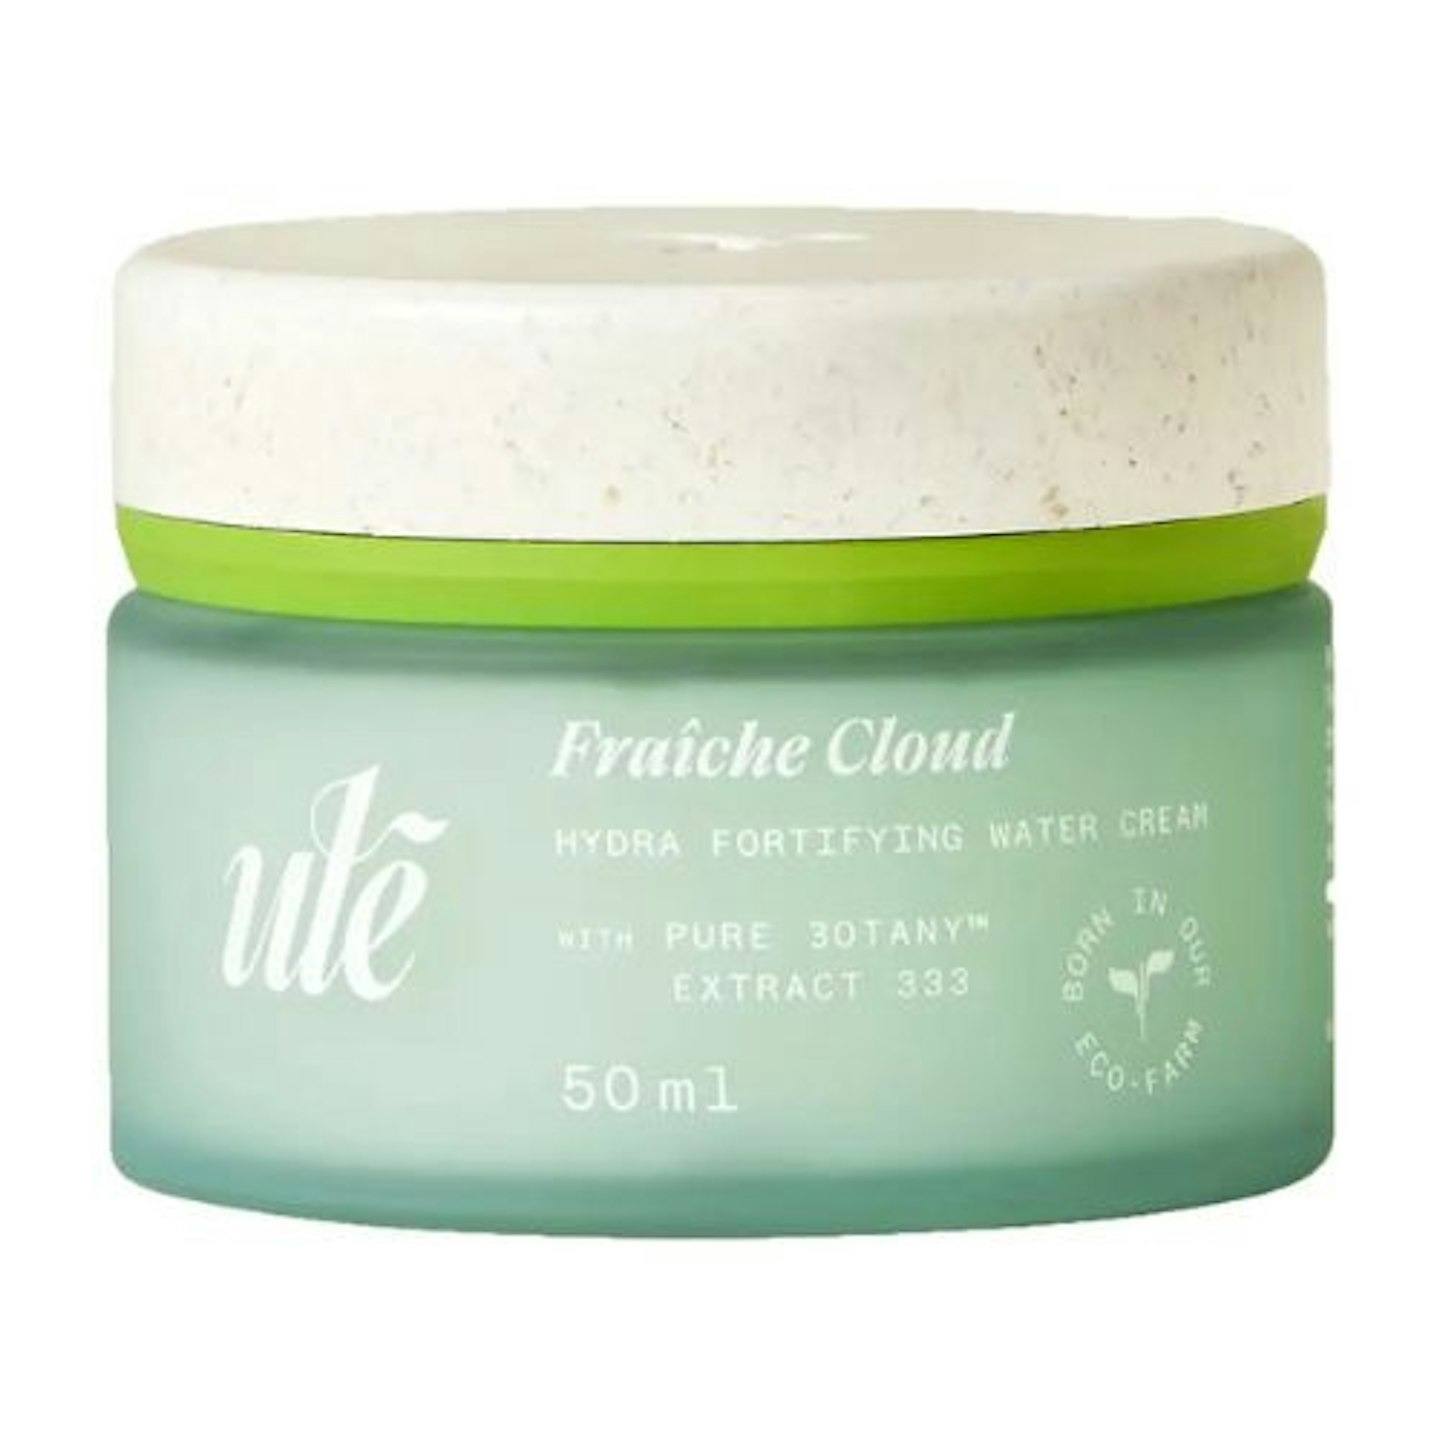 Ulé Fraiche Cloud Hydra Fortifying Water Cream